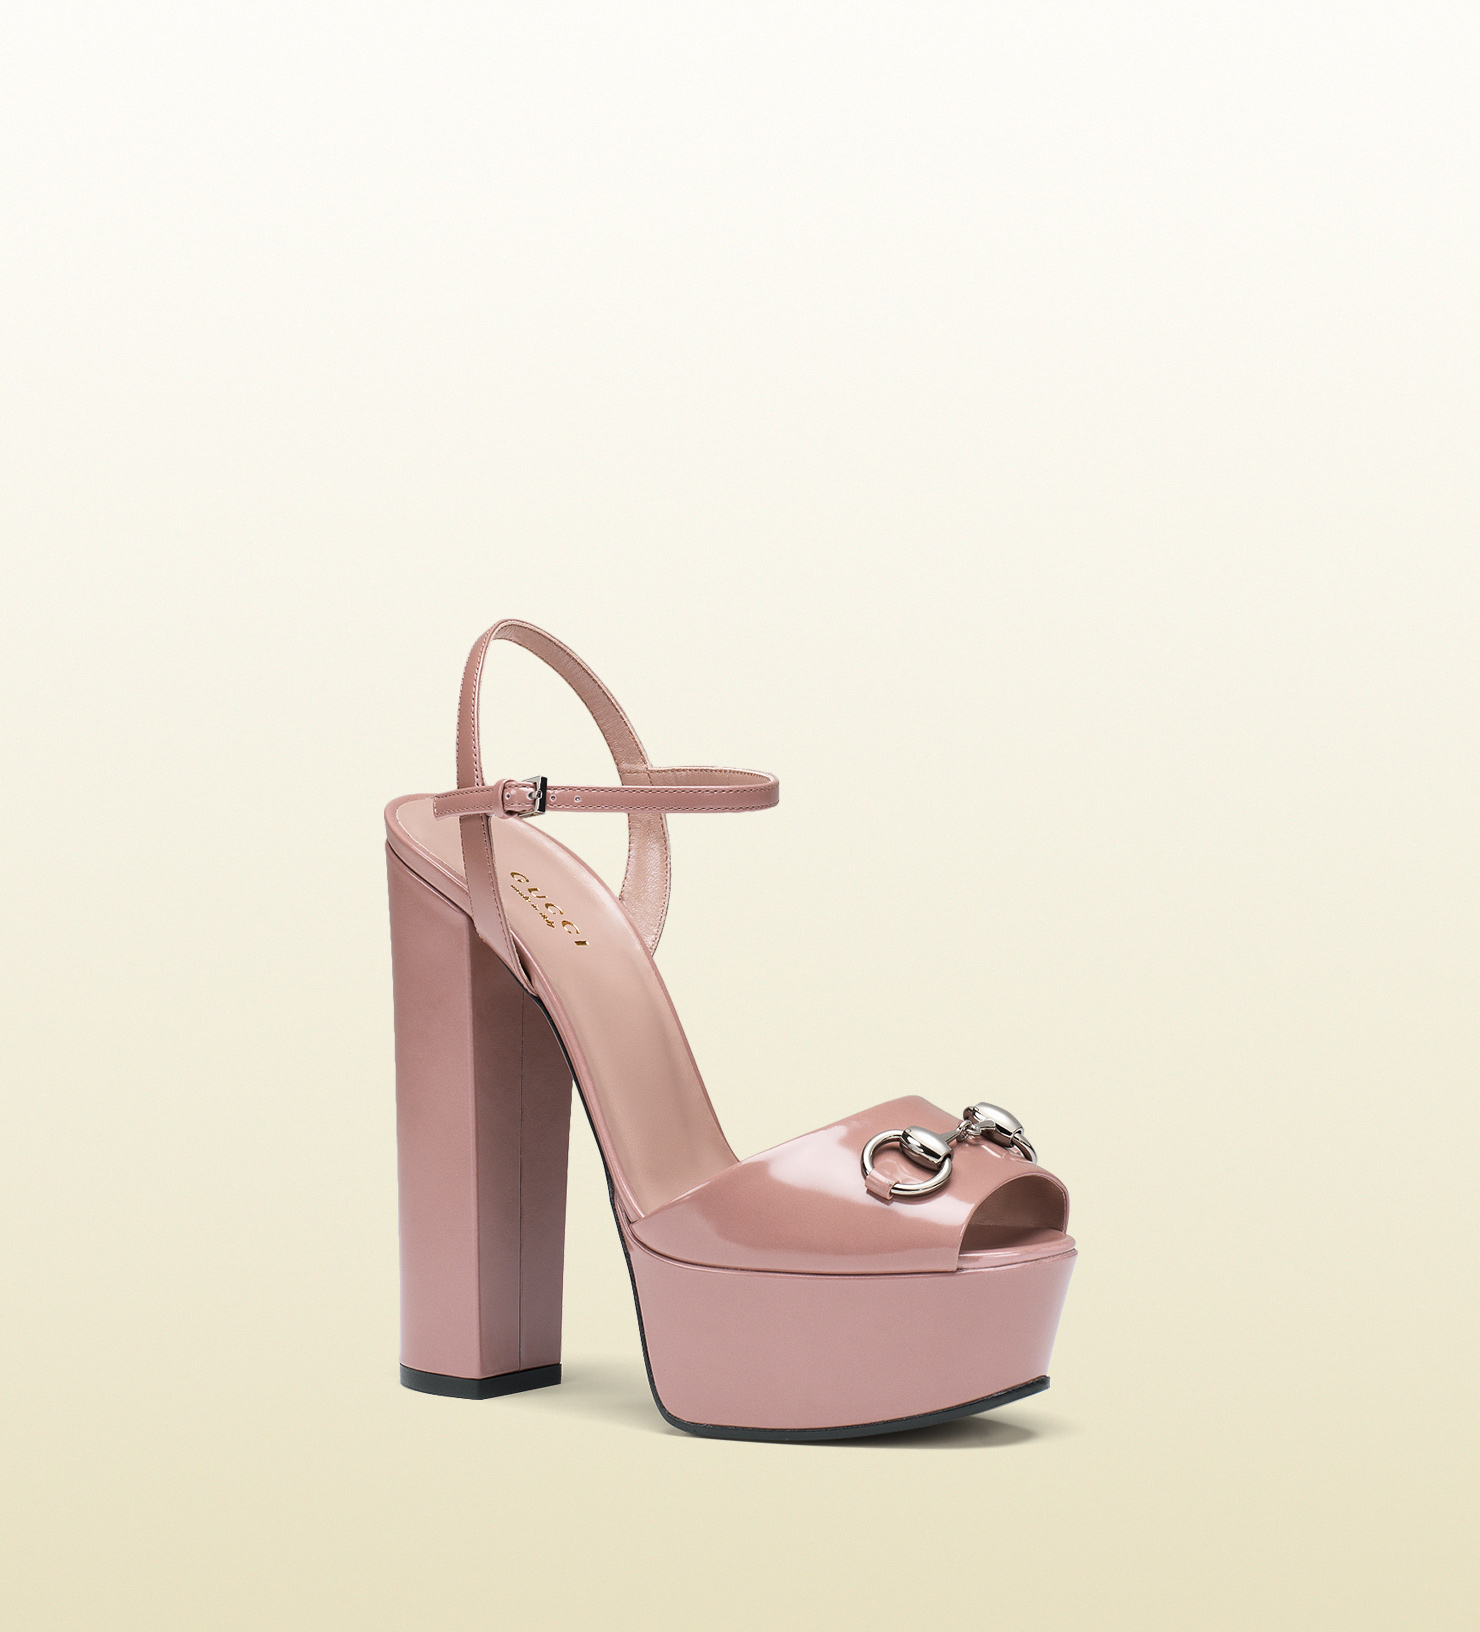 Gucci Leather Platform Horsebit Sandal in Rose (Pink) - Lyst